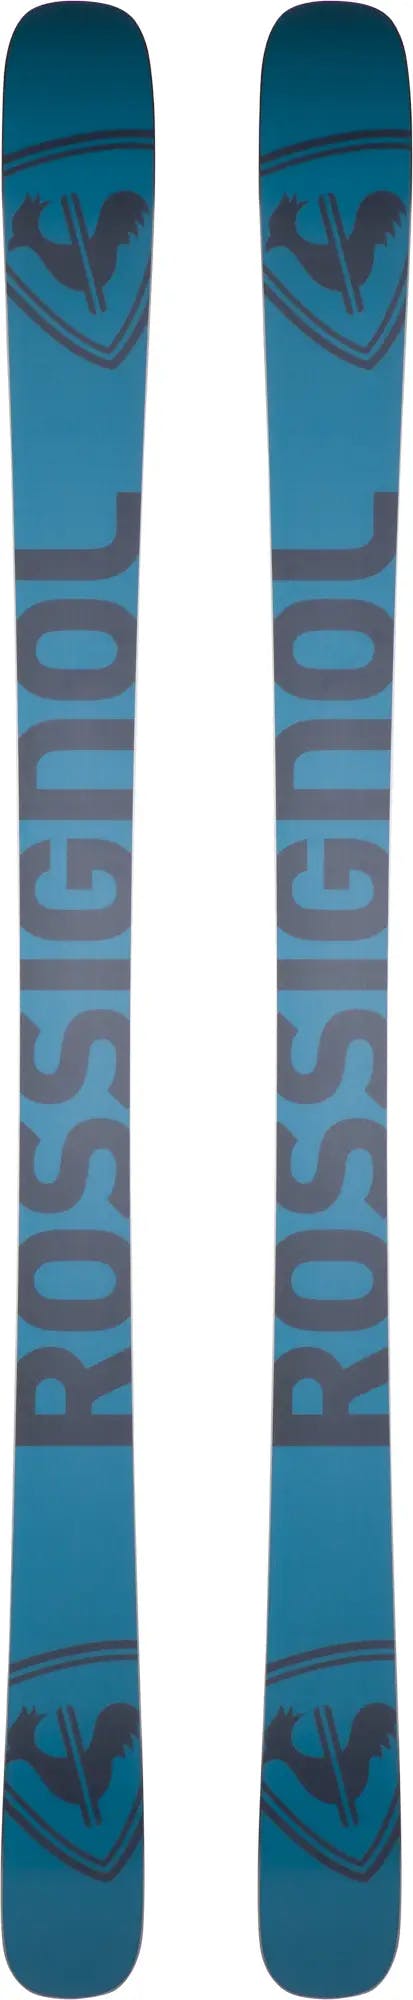 Rossignol Black Ops 98 Skis · 2023 · 172 cm